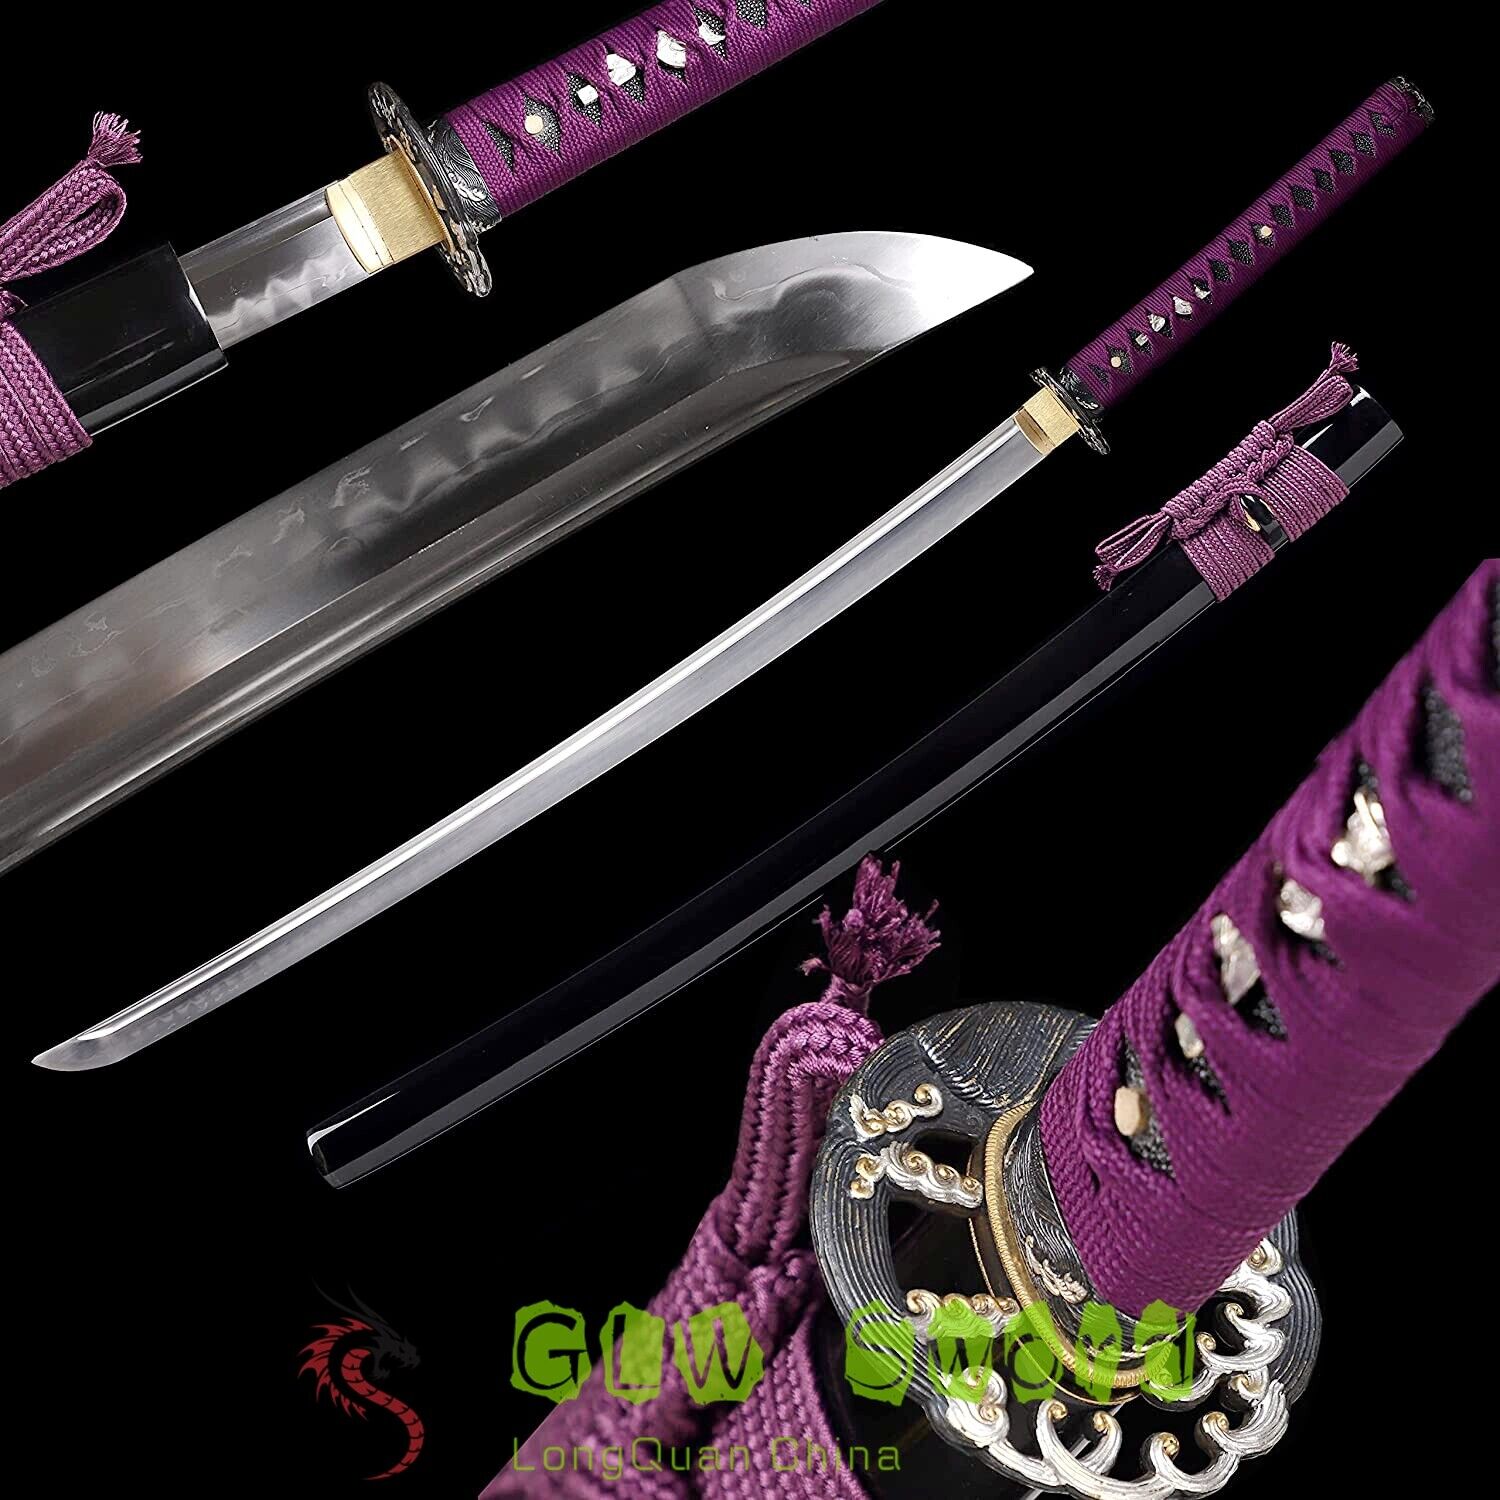 Handmade Japanese Clay Tempered Shihozume Folded Steel Blade Katana Swords Sharp